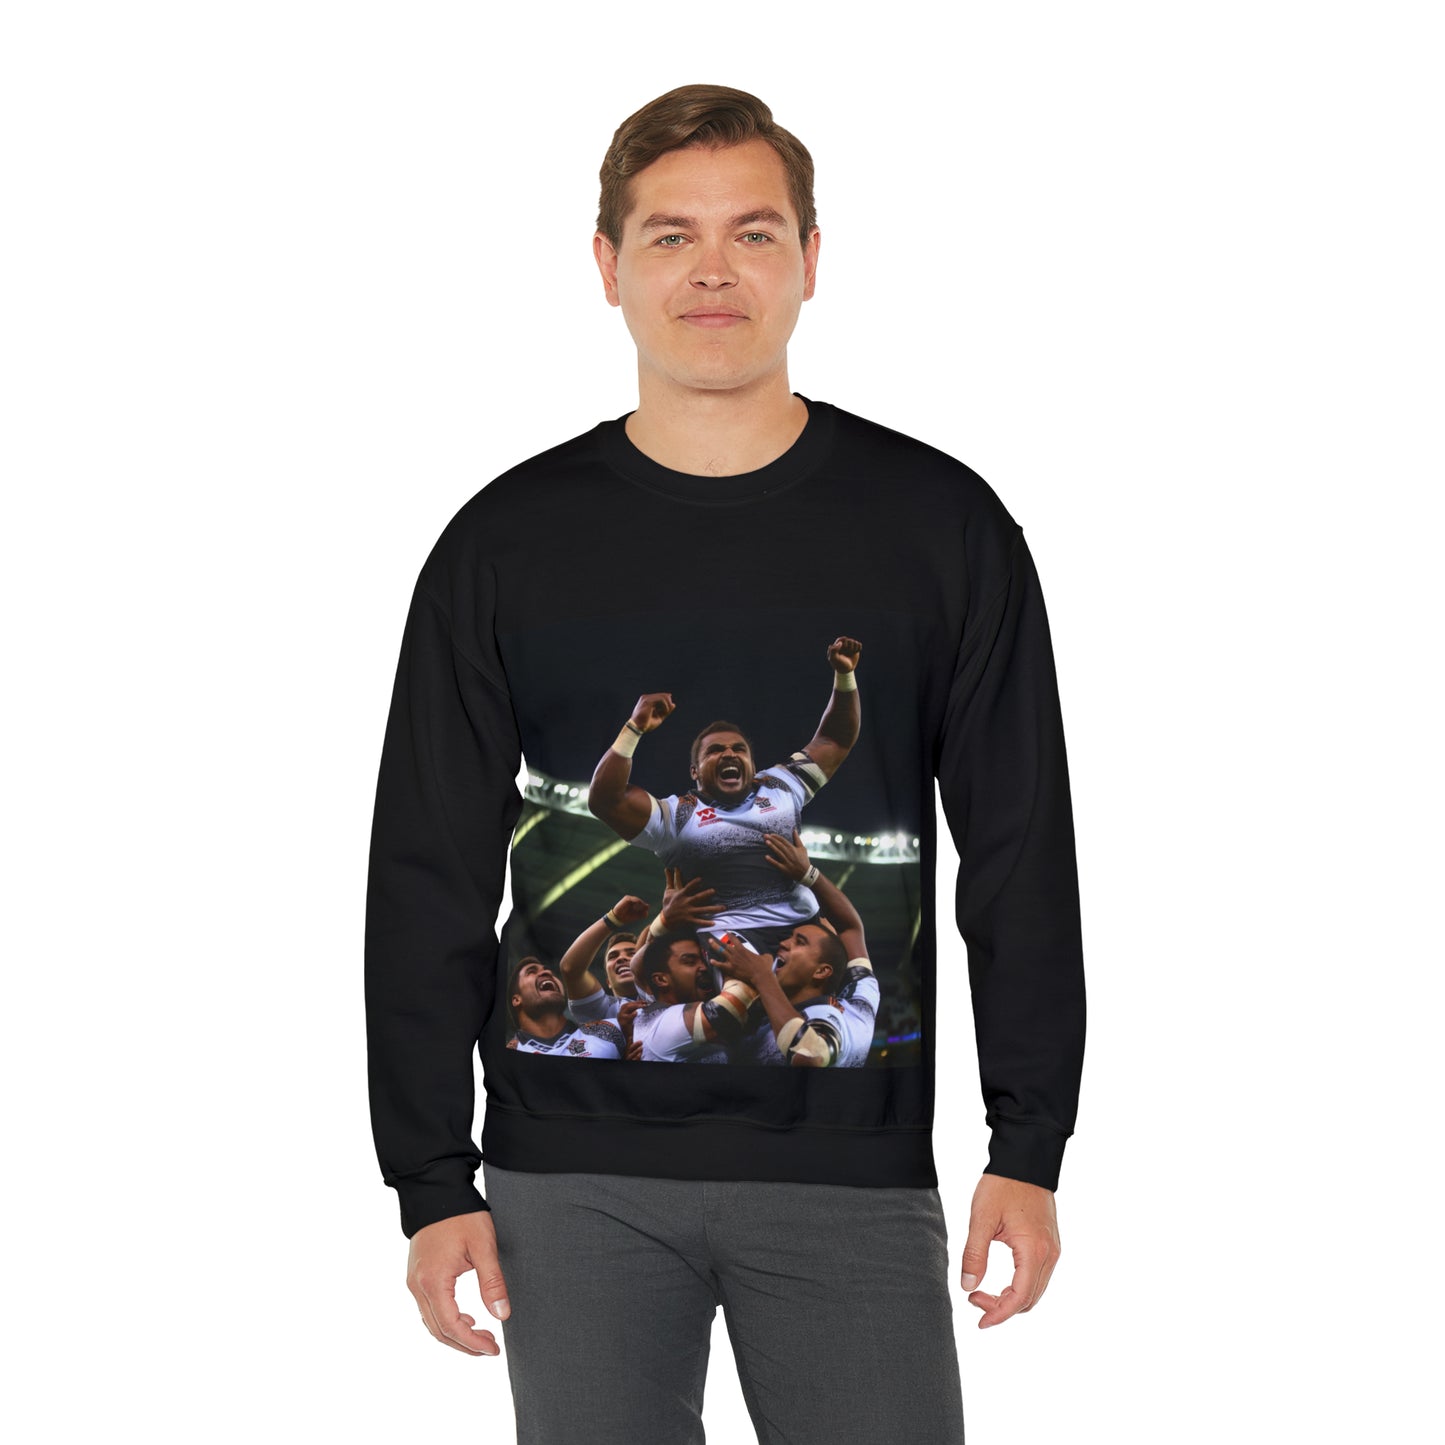 Fiji RWC Celebration - black sweatshirt